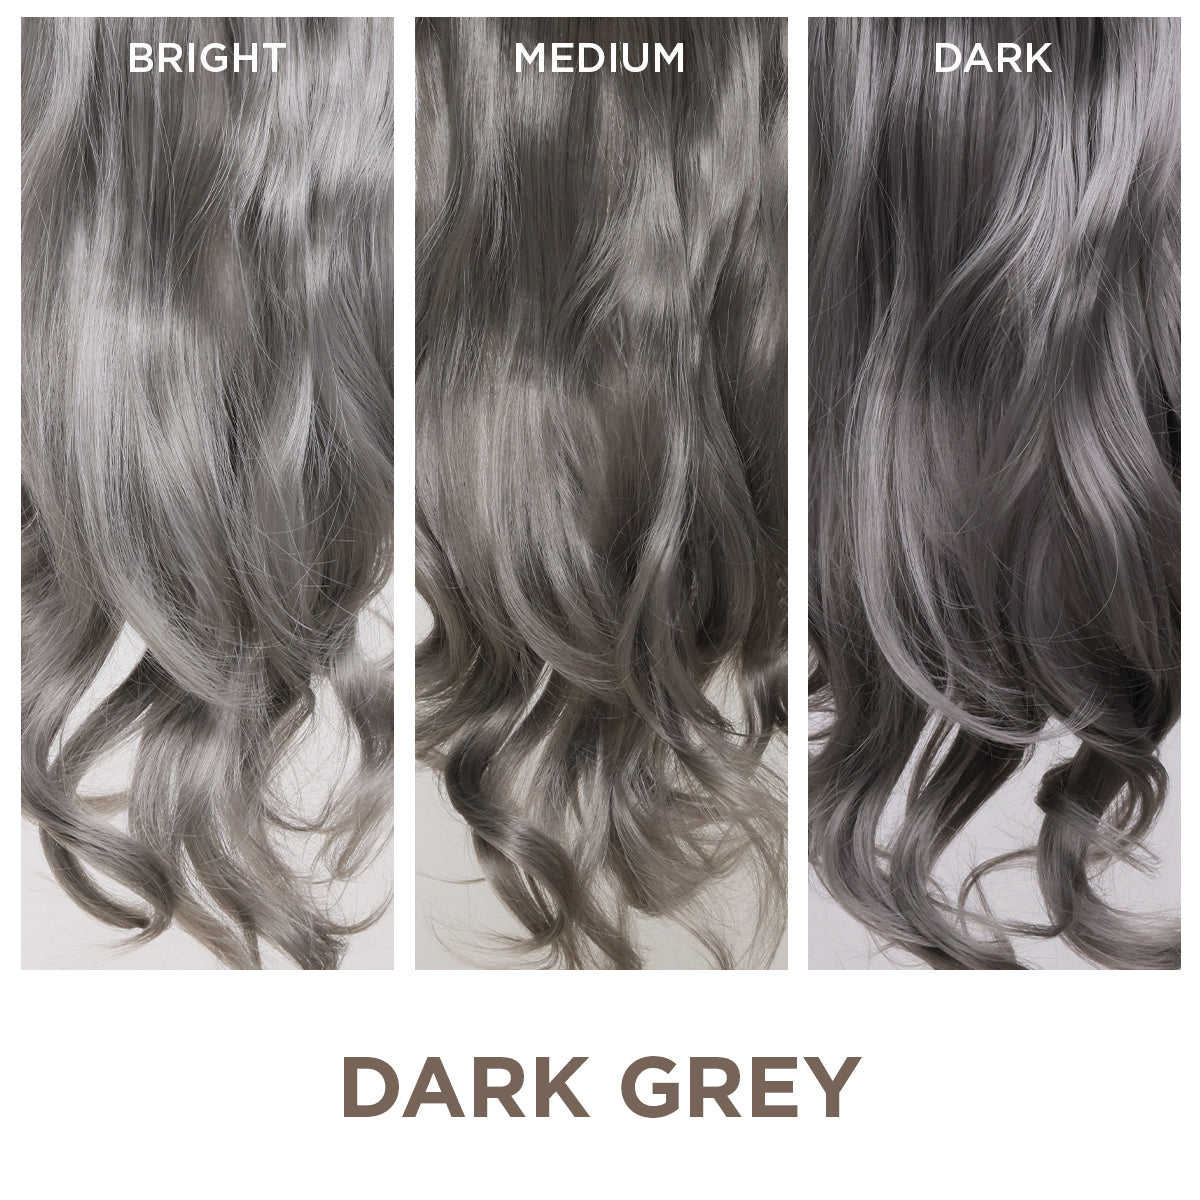 Dark Grey + 1 FREE HALO